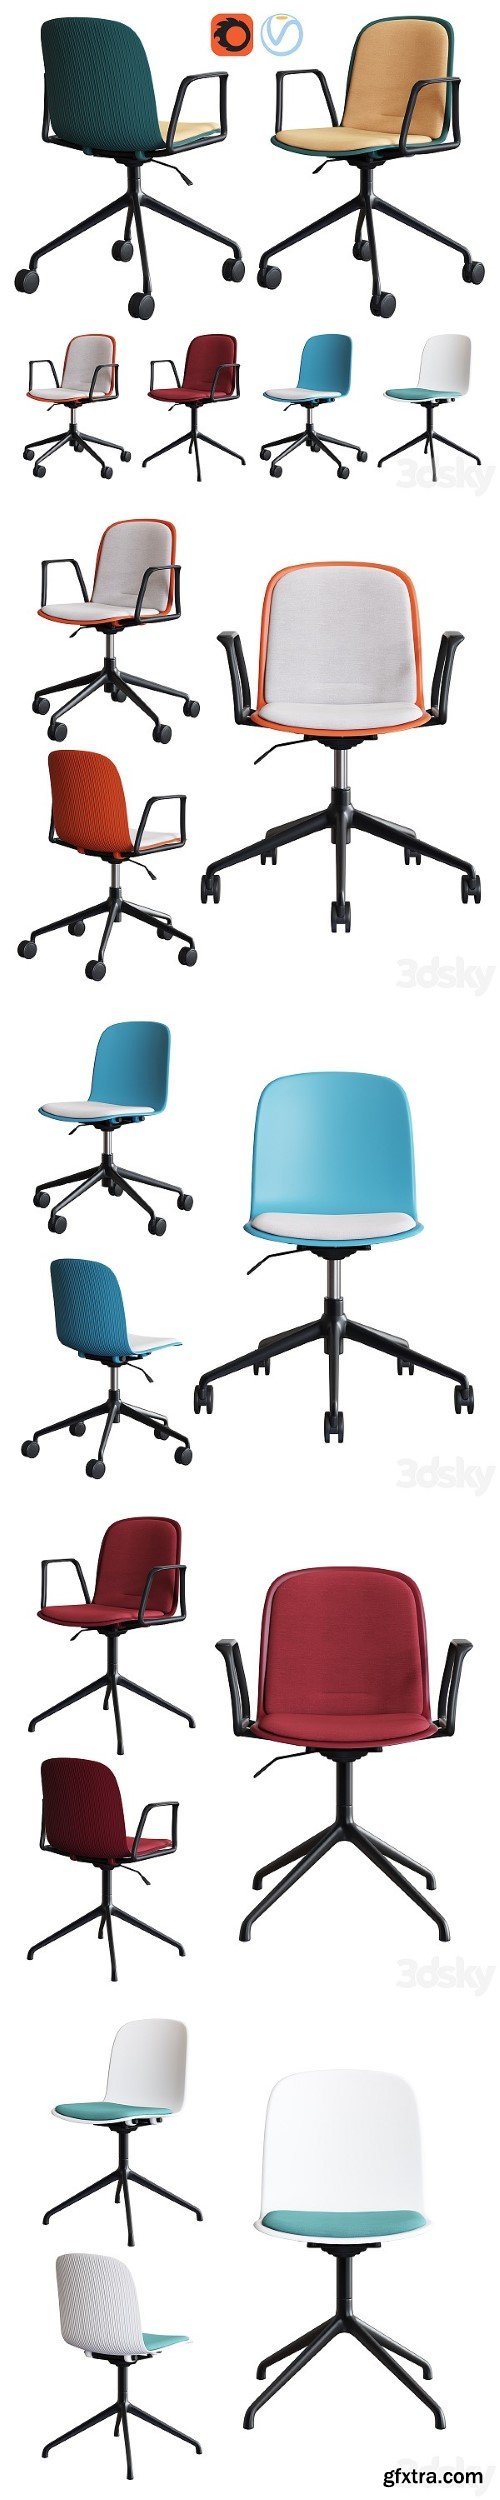 Steelcase Office Chair Cavatina Set1